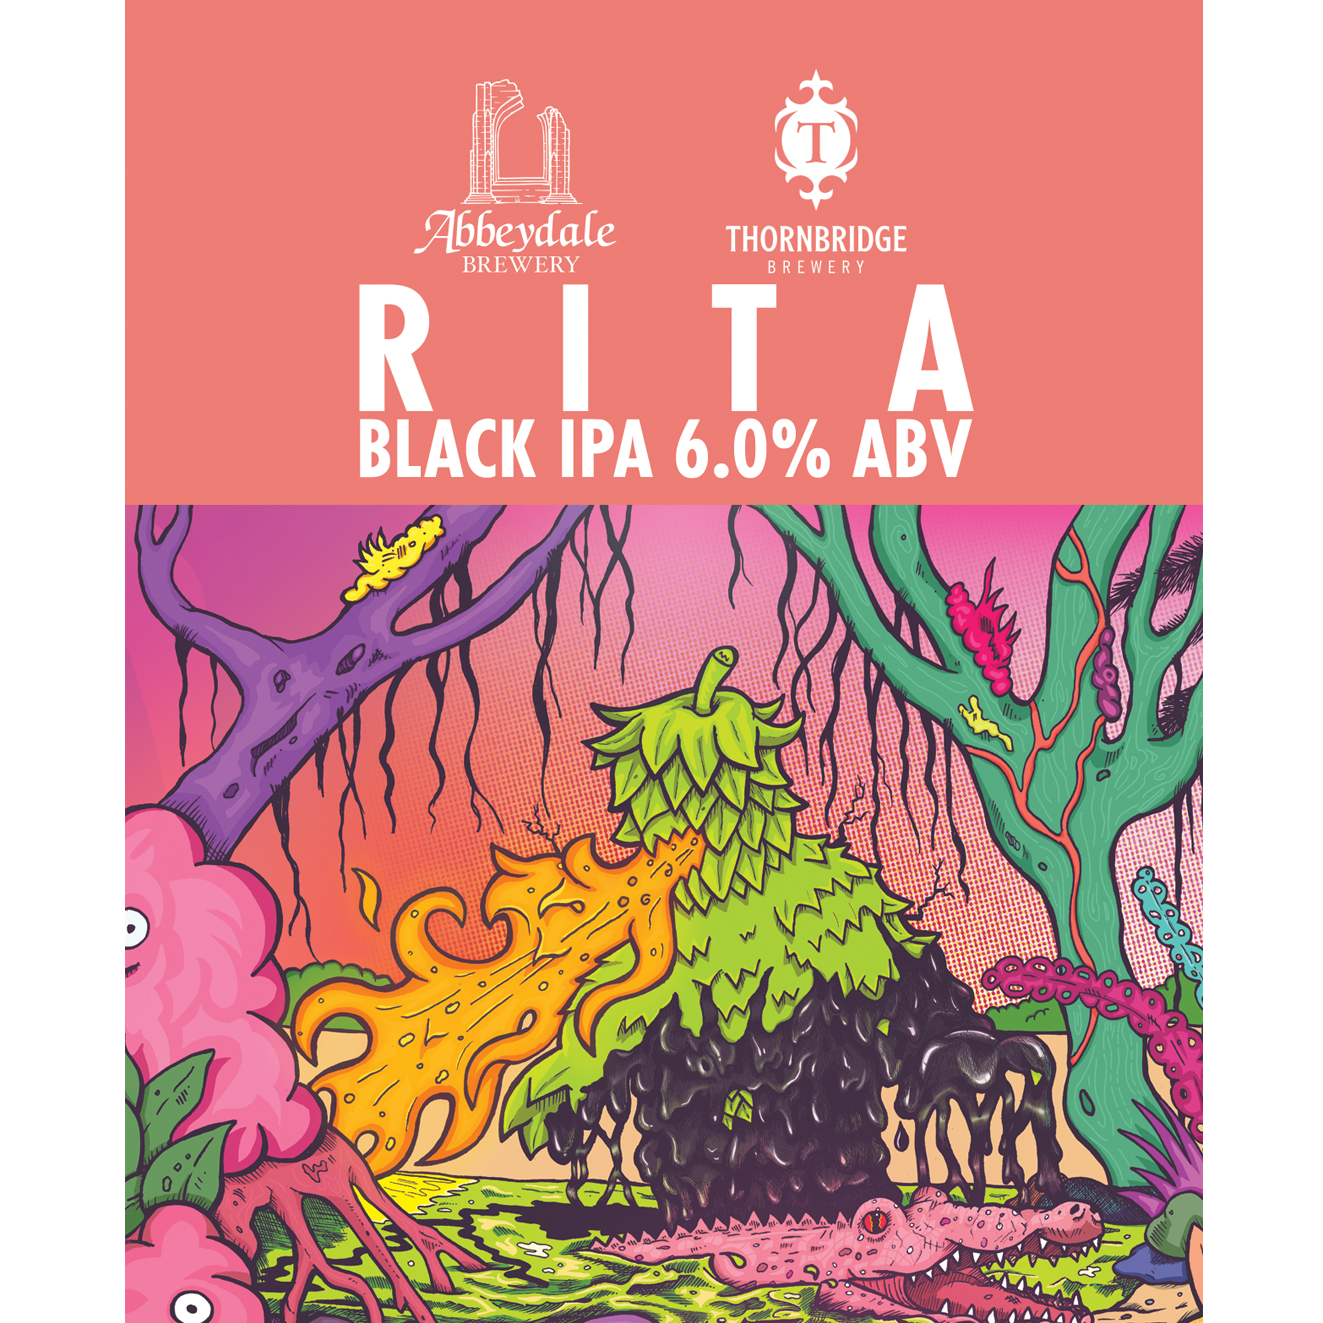 Craft Beer Label Illustration - Abbeydale Brewery x Thornbridge Brewery - Rita Black IPA Cask Artwork